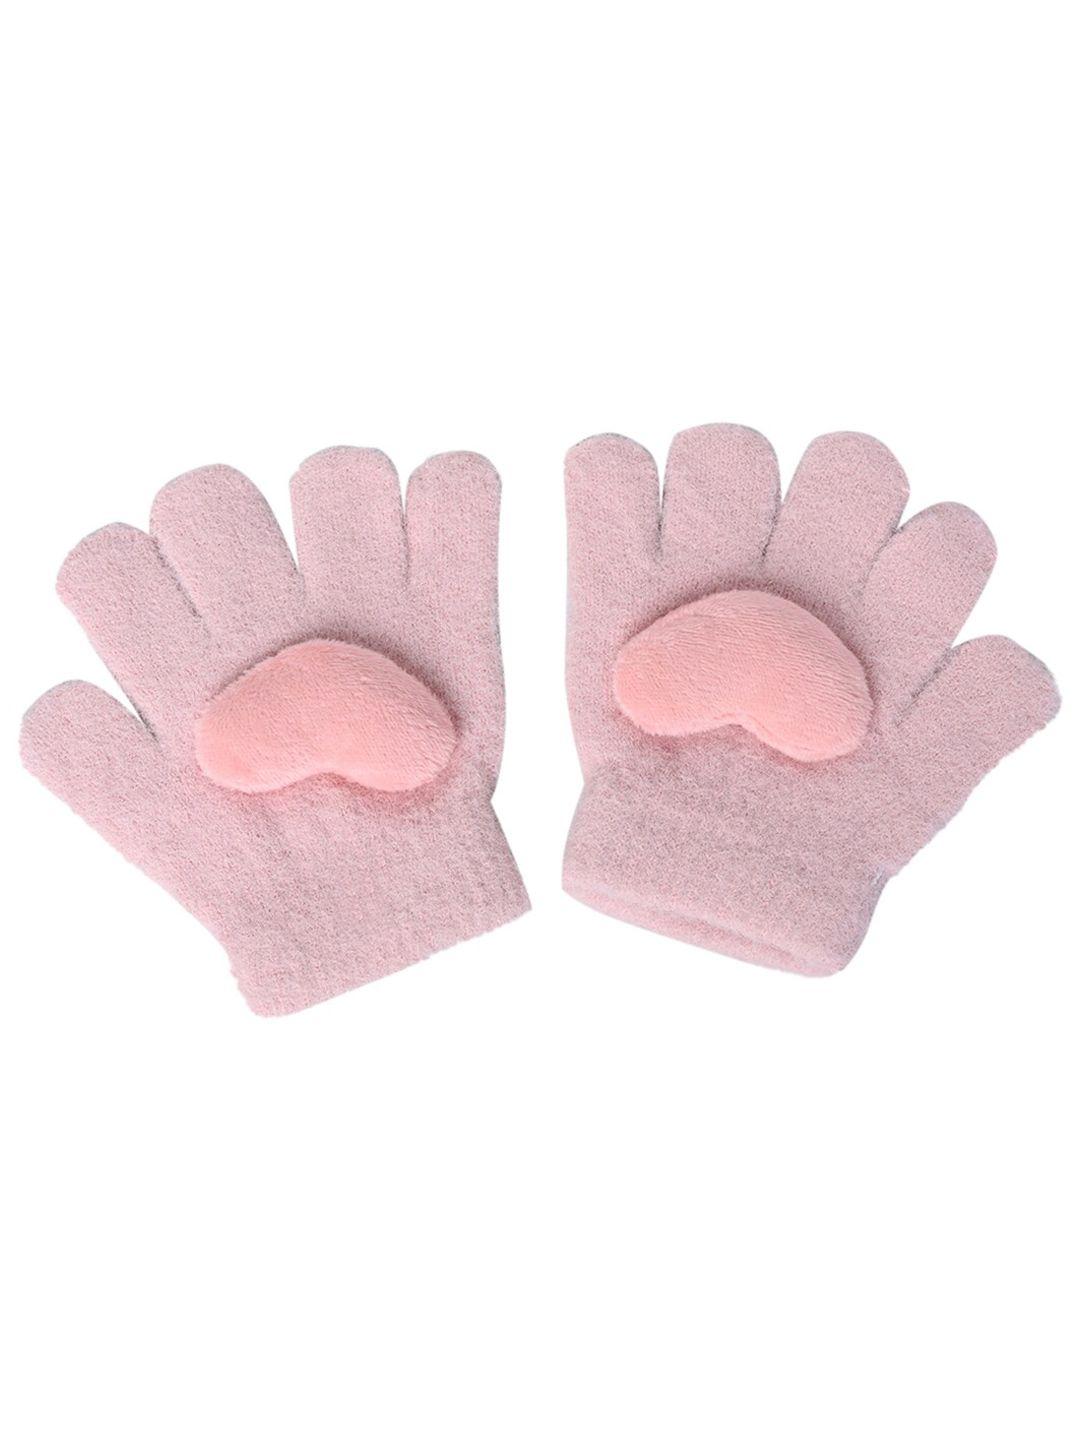 kid-o-world girls patterned woollen gloves